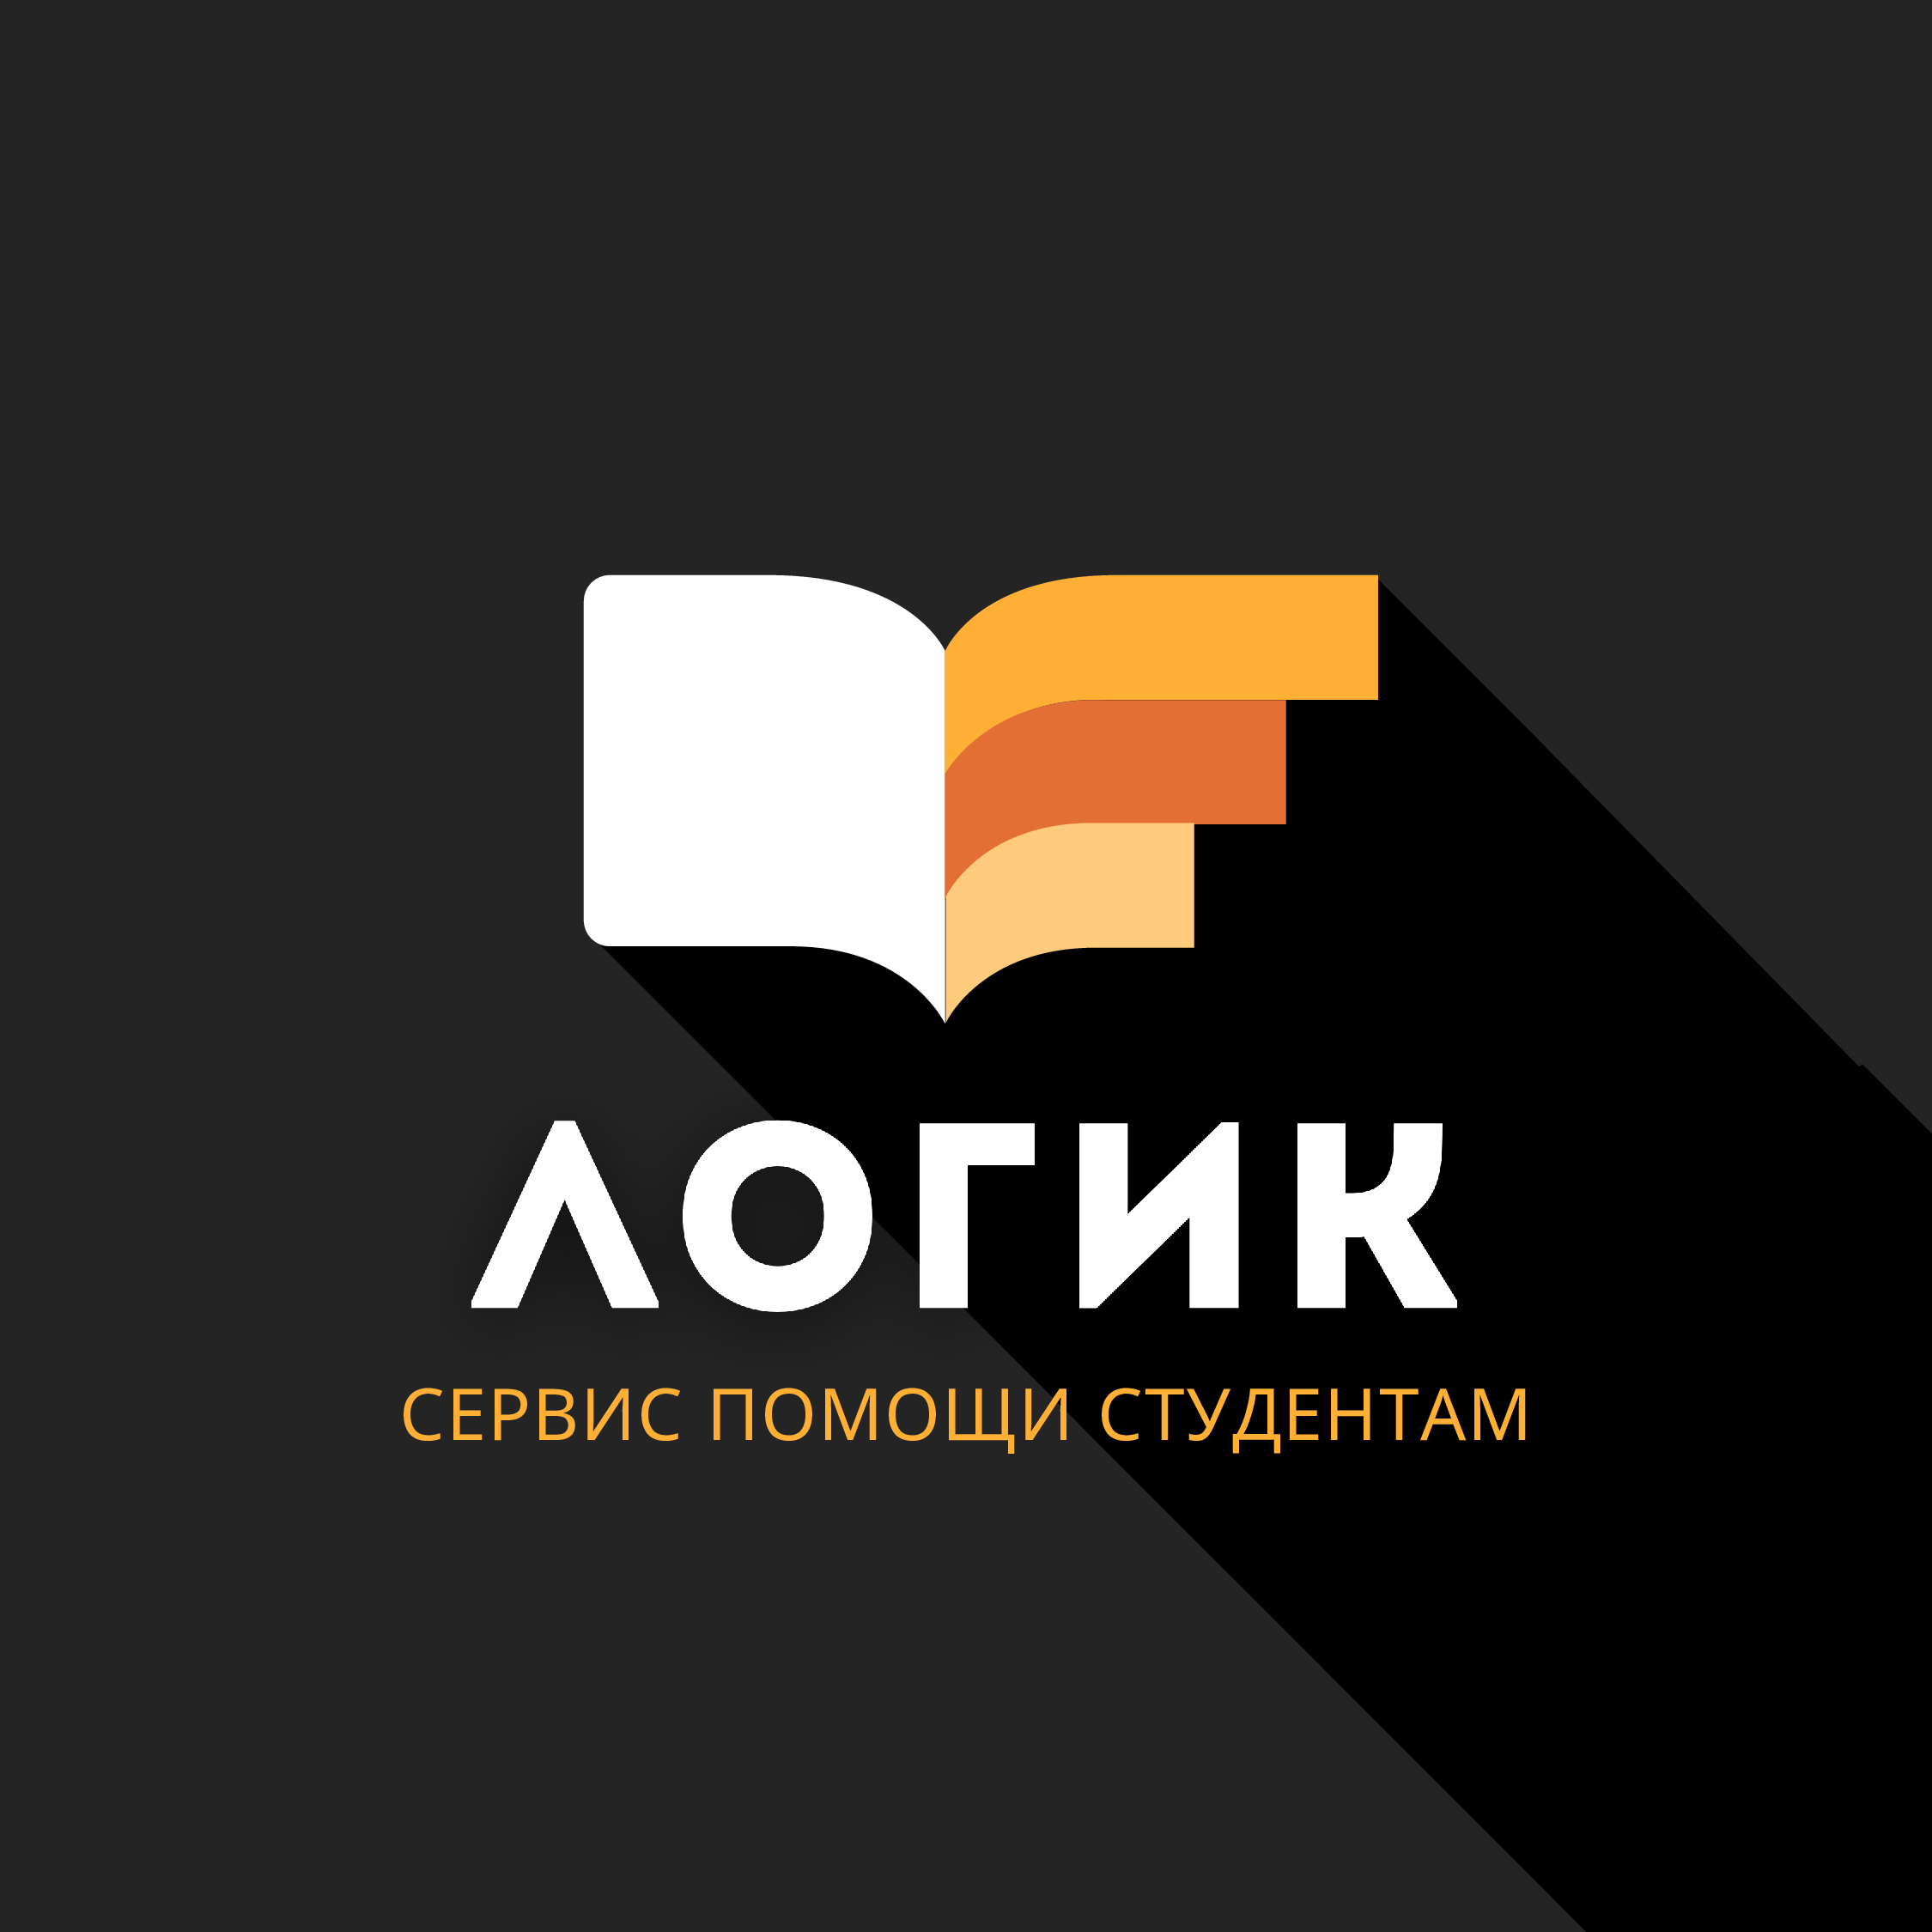 ЛОГИК-сервис помощи студентам в Барнауле